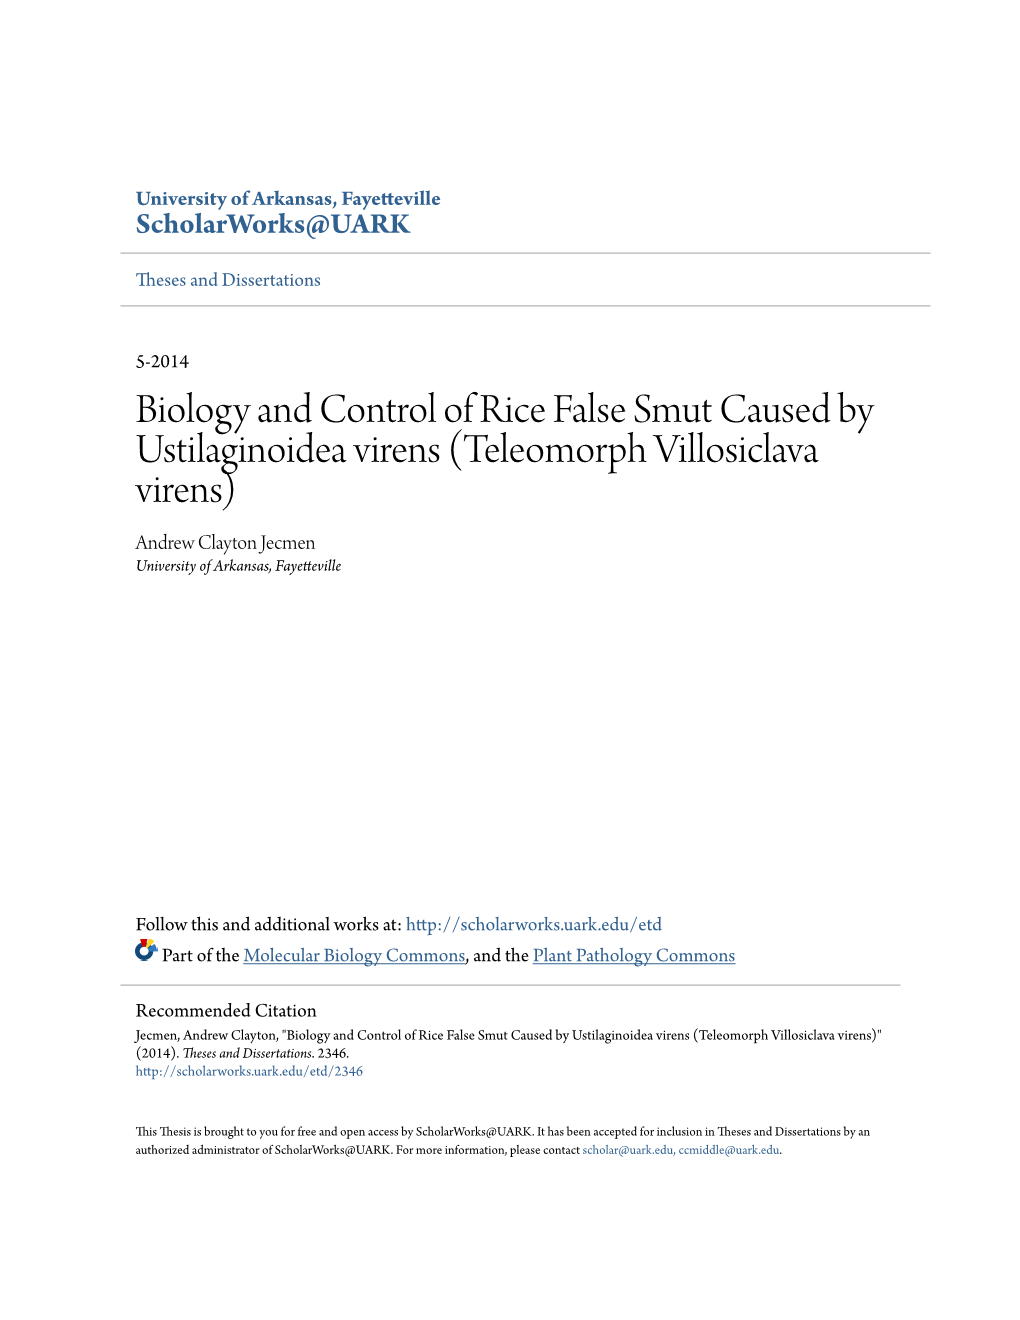 Biology and Control of Rice False Smut Caused by Ustilaginoidea Virens (Teleomorph Villosiclava Virens) Andrew Clayton Jecmen University of Arkansas, Fayetteville